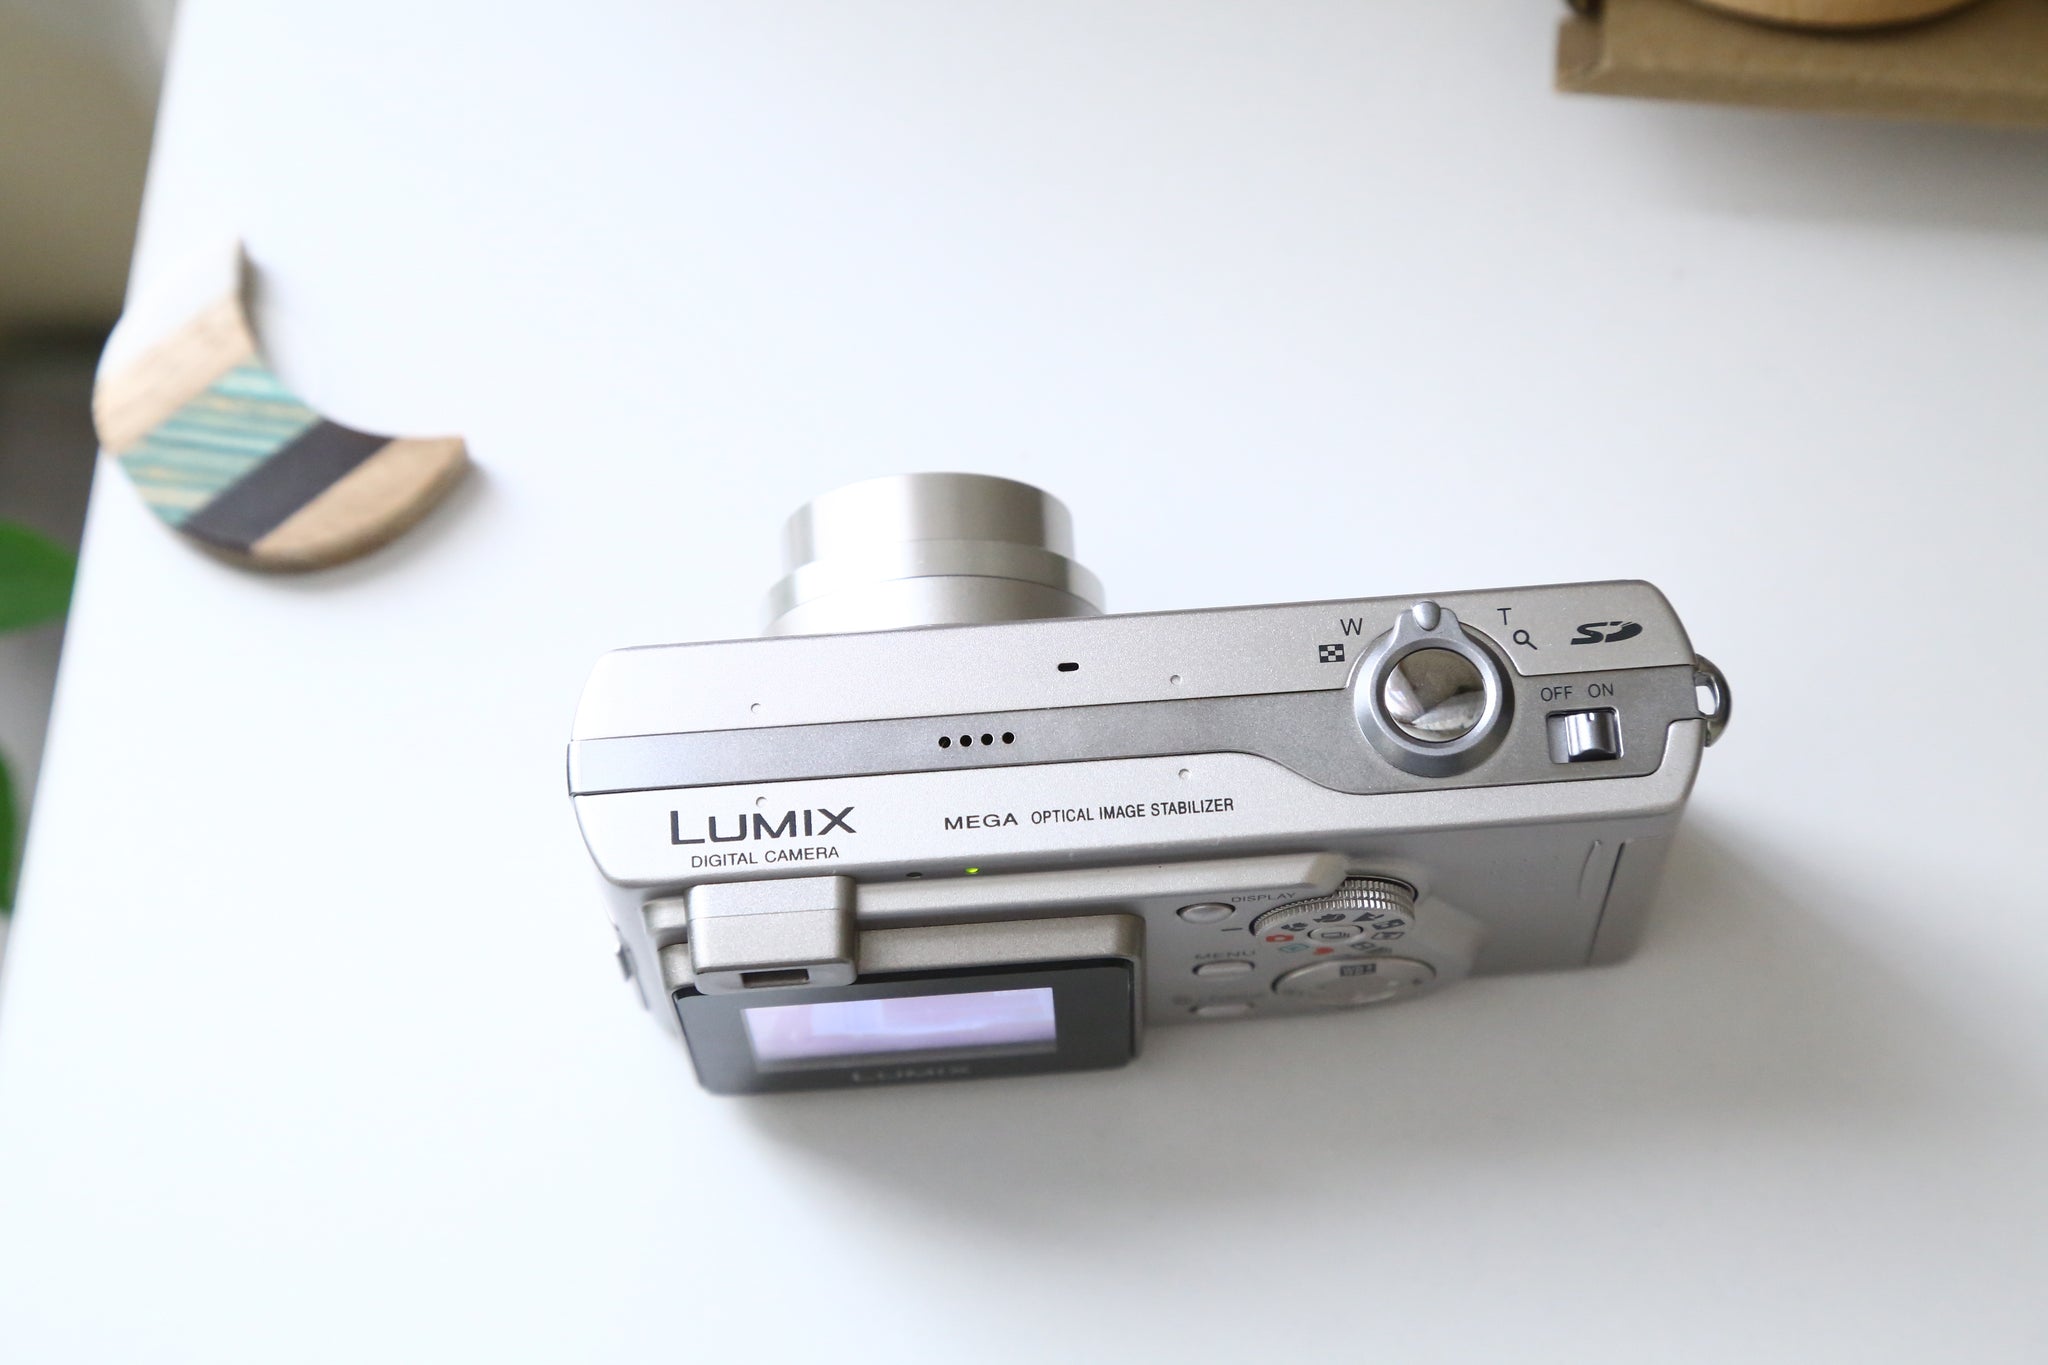 Panasonic LUMIX DMC-FX1【完動品】【美品❗️】【実写済み】▪️オールドコンデジ▪️デジタルカメラ – Ein Camera